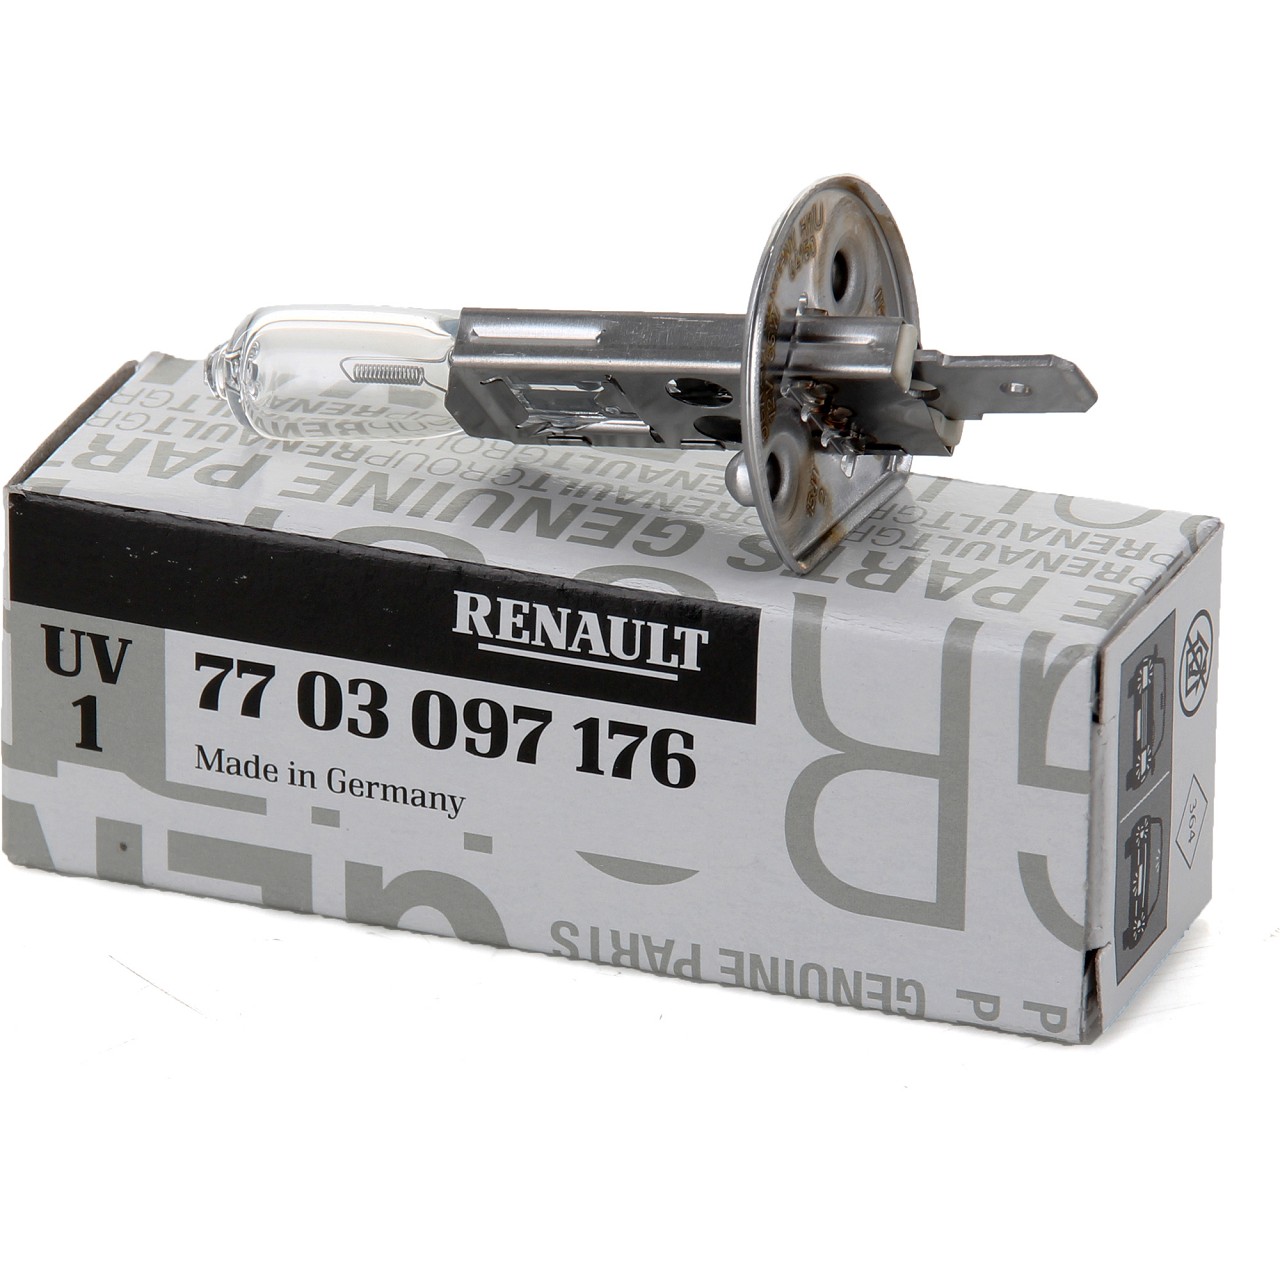 ORIGINAL Renault Halogenlampe H1 12V 55W P14.5s (1 Stück) 7703097176